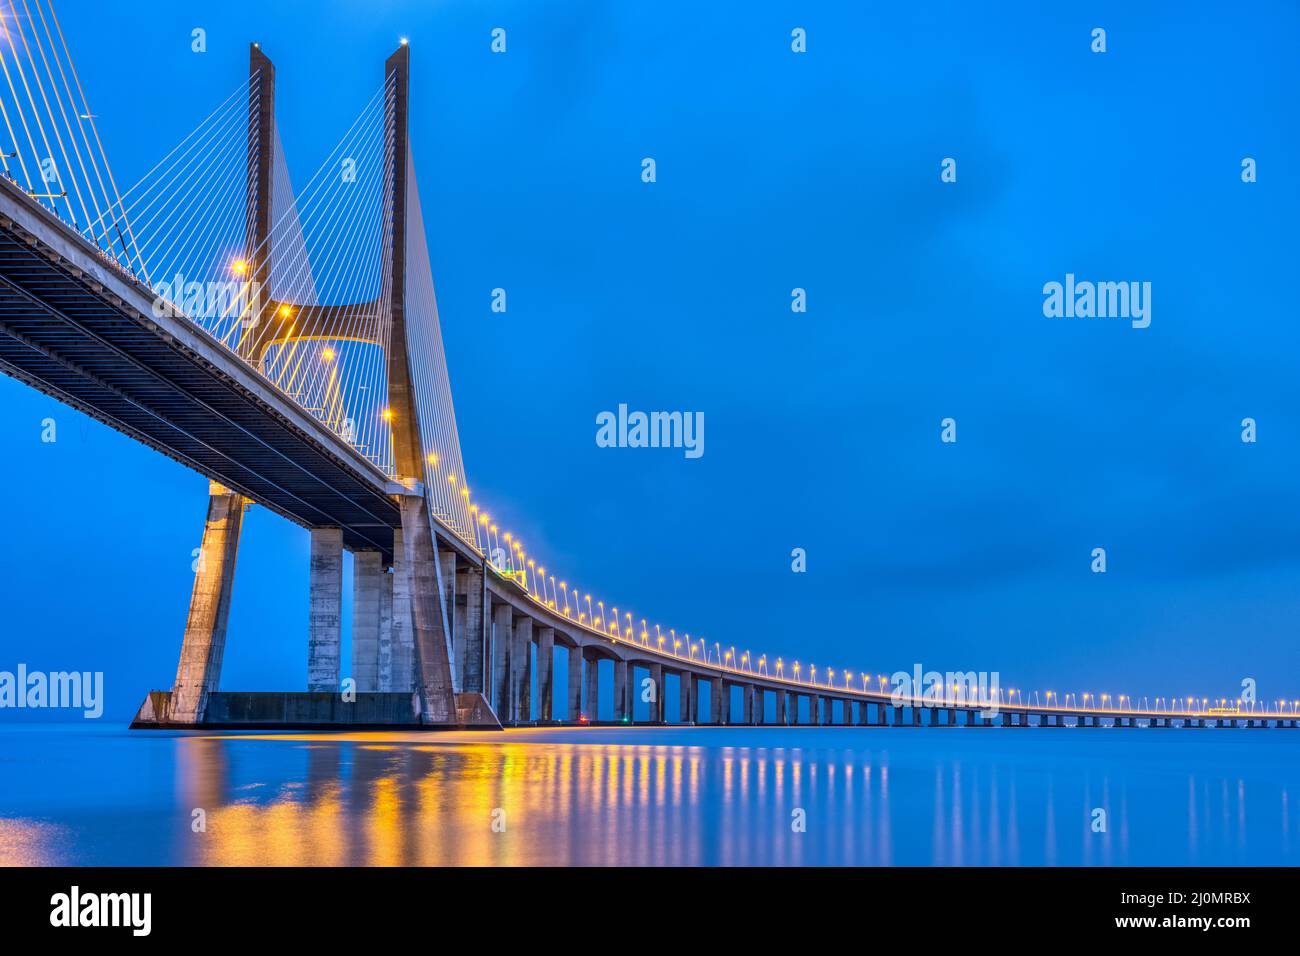 The Vasco da Gama bridge across the river Tagus in Lisbon, Portugal, at dusk Stock Photo